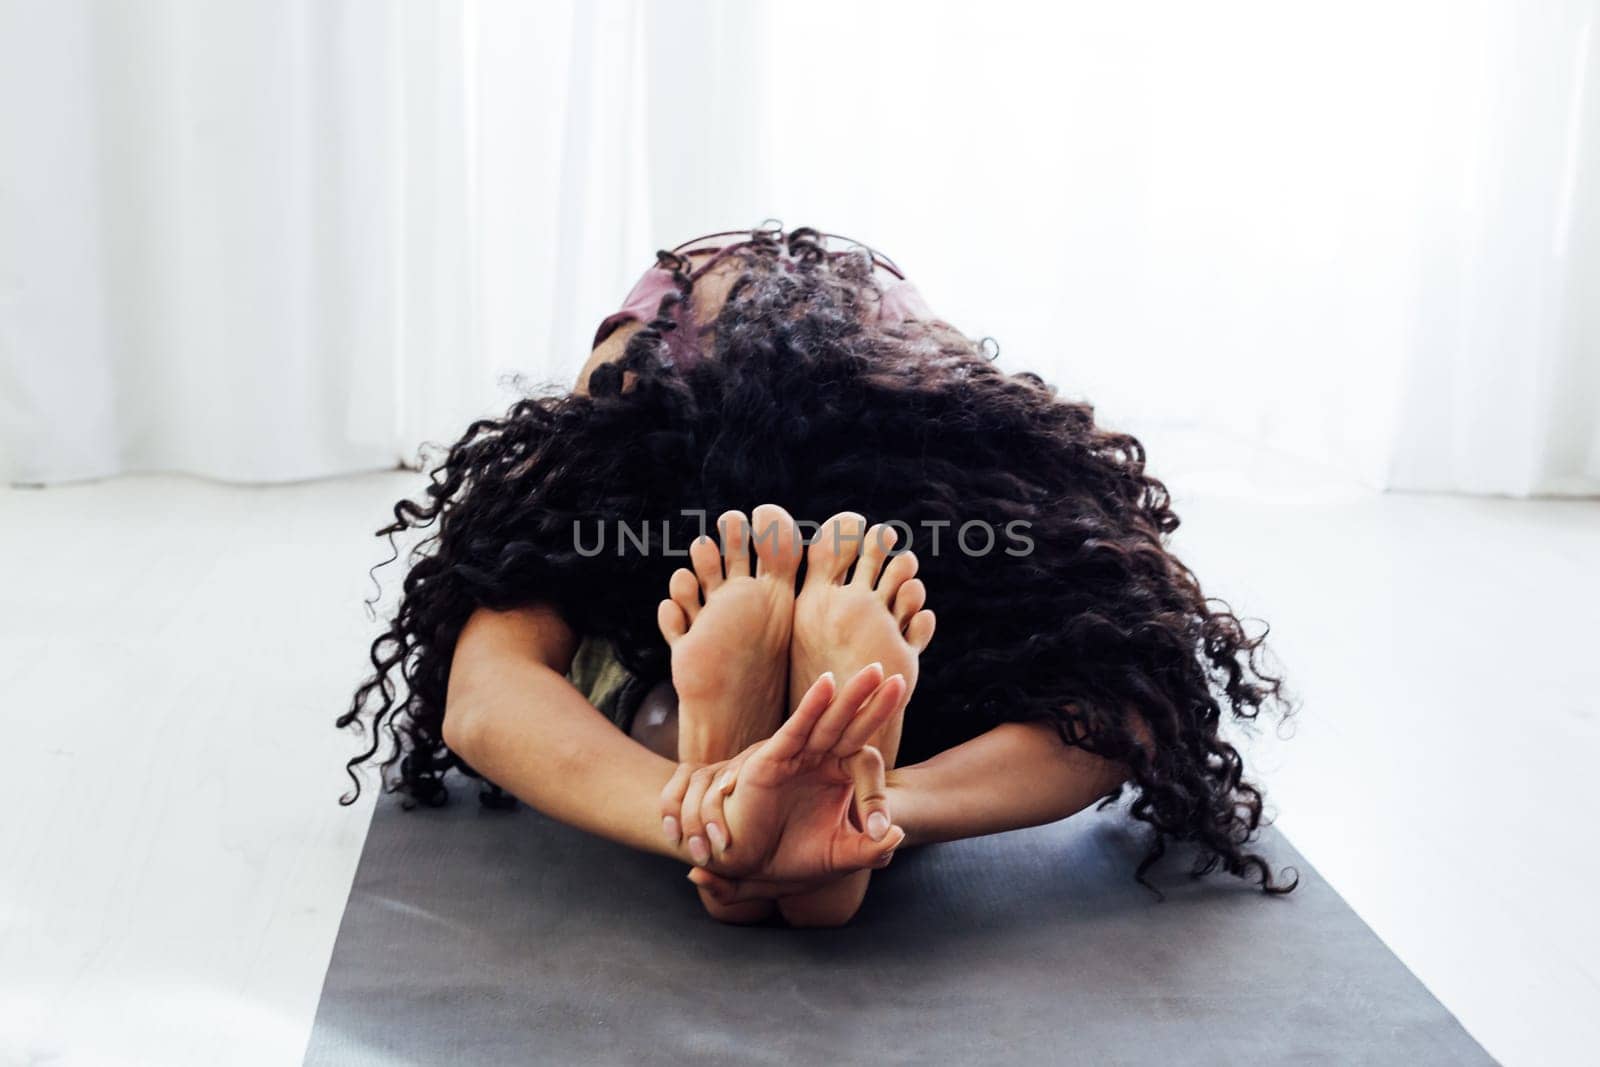 Female engaged in yoga fitness asana body flexibility